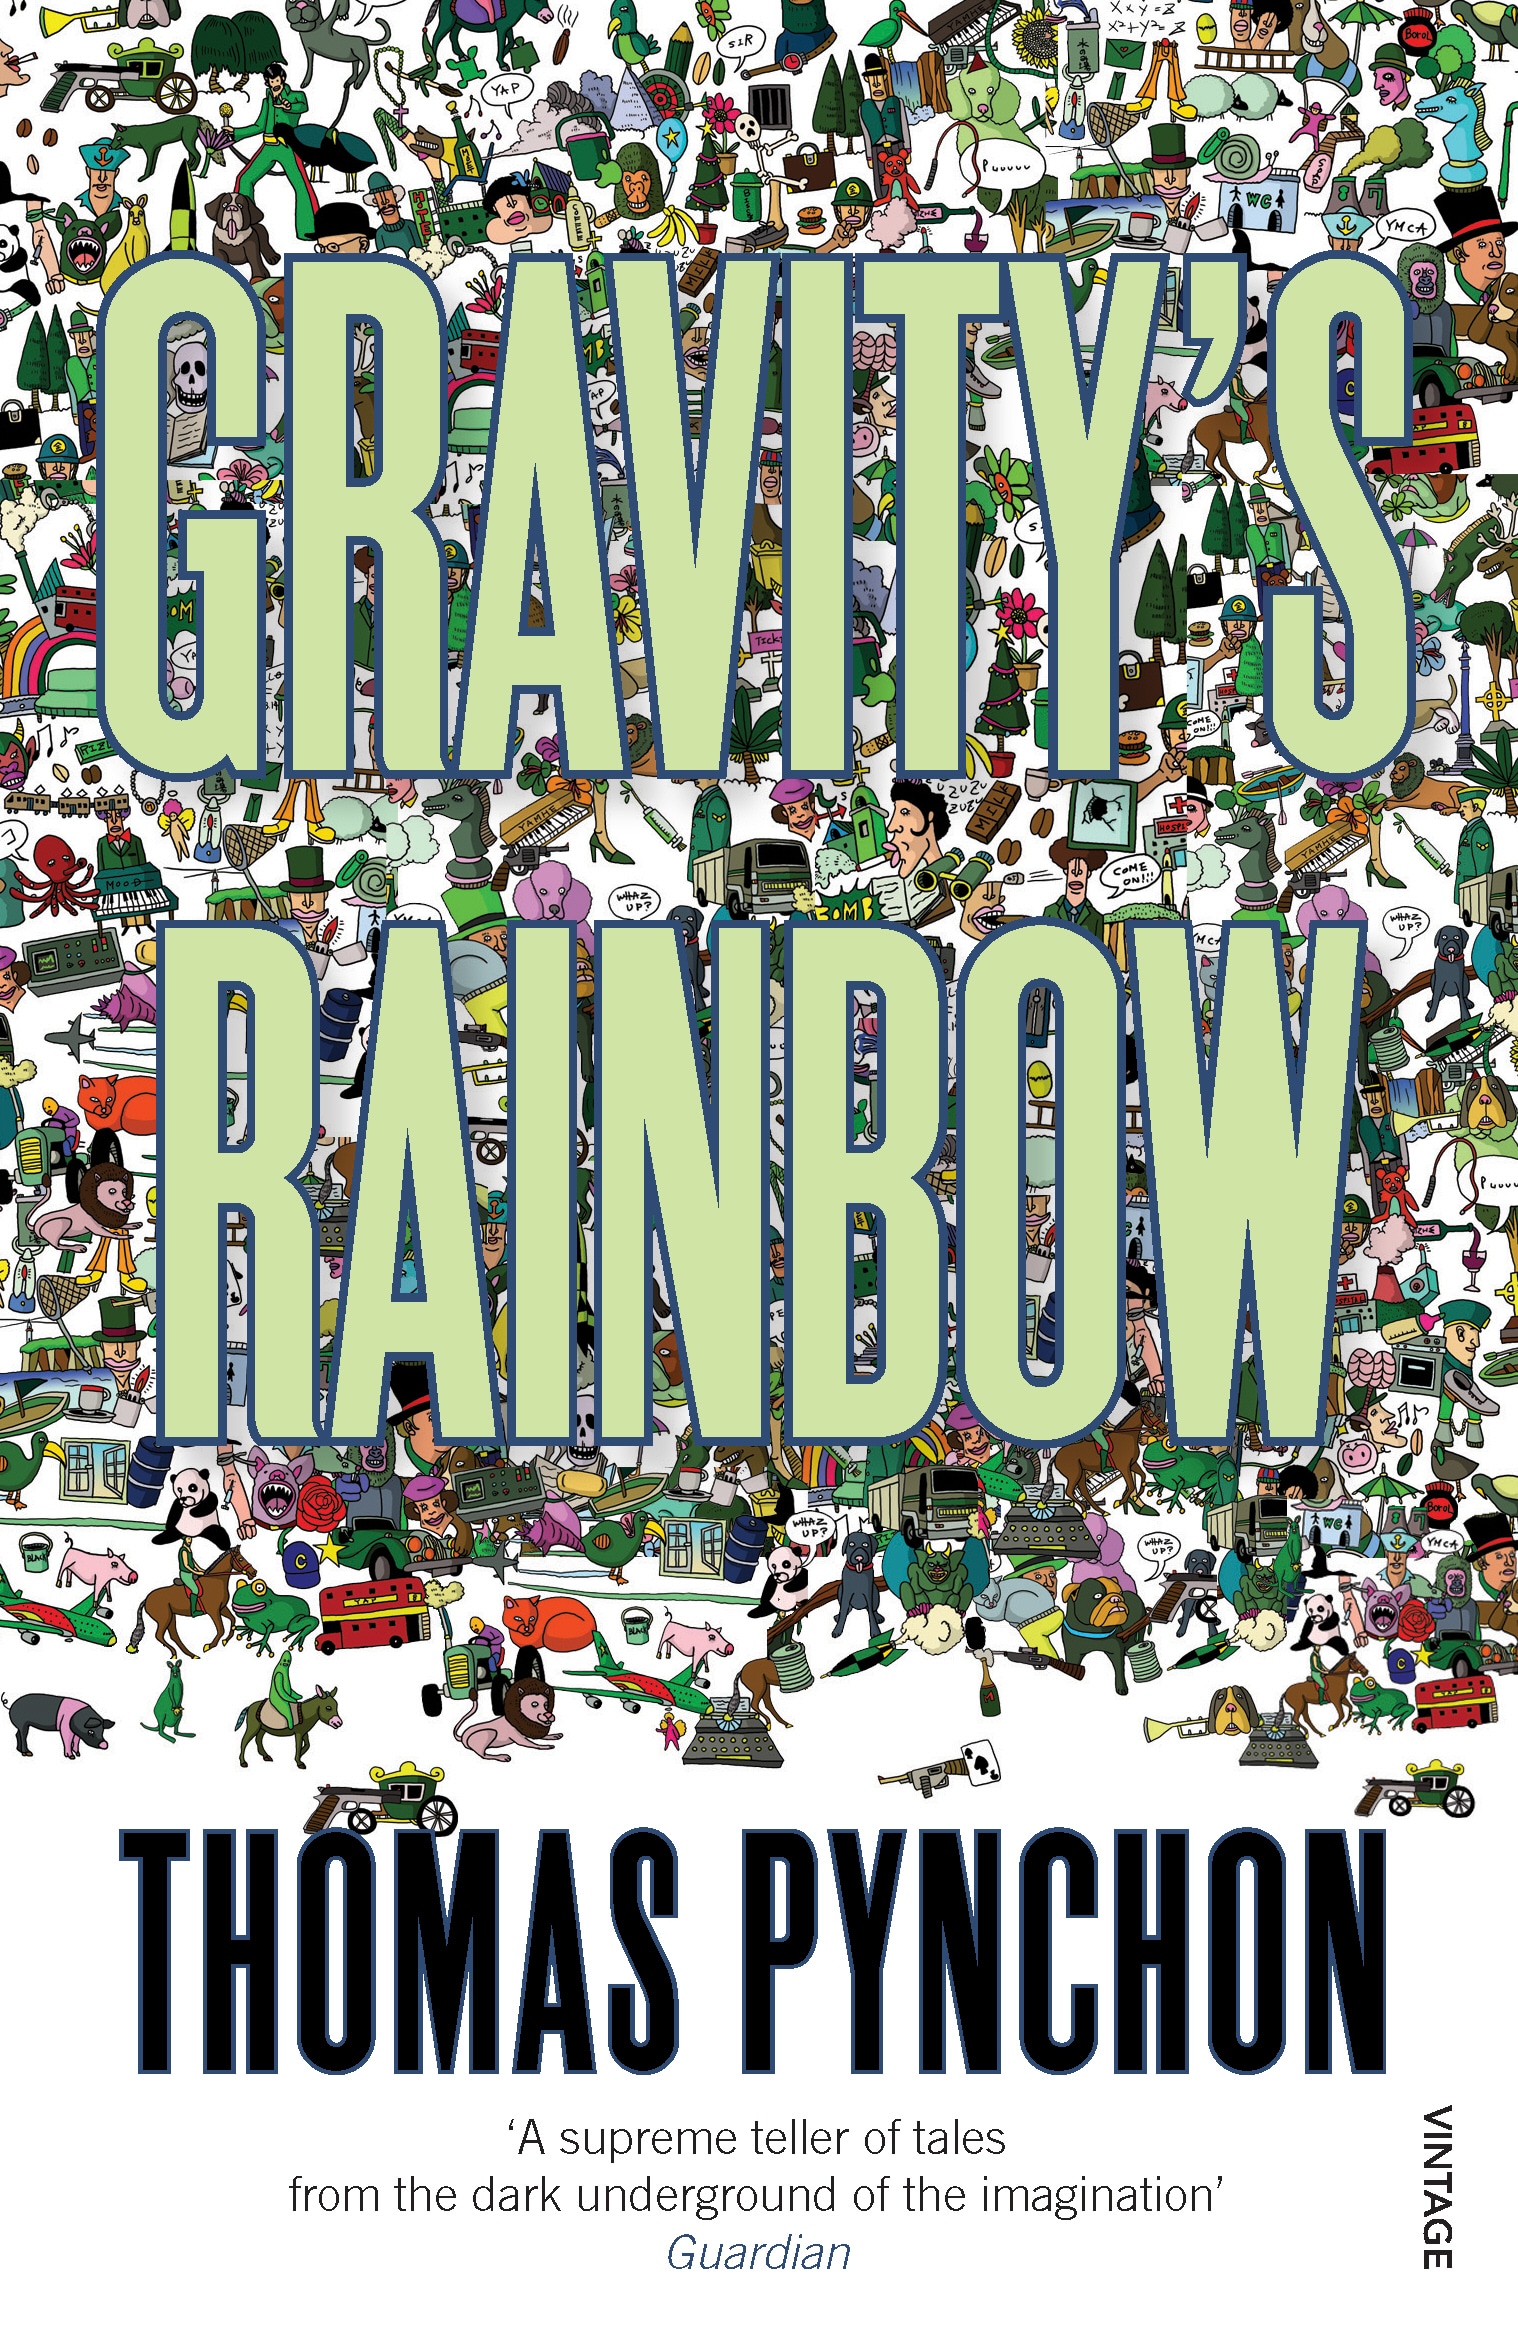 Book “Gravity's Rainbow” by Thomas Pynchon — July 20, 1995